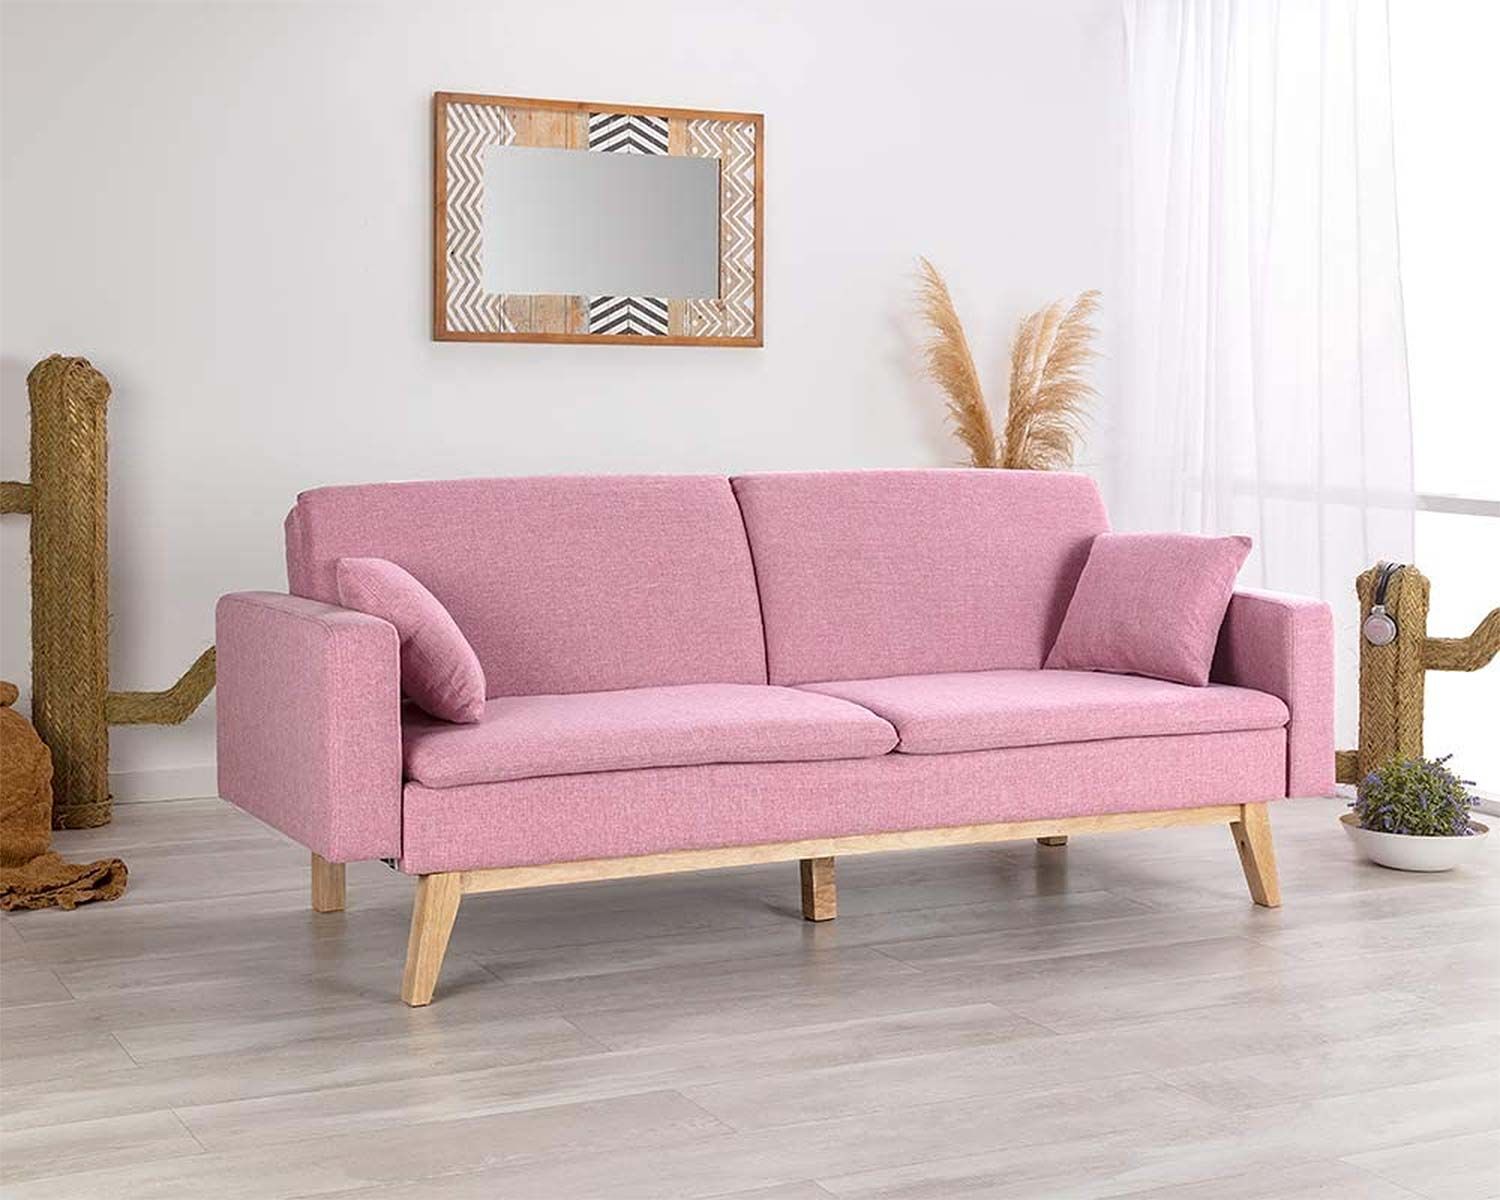 sofa bed cama en ingles